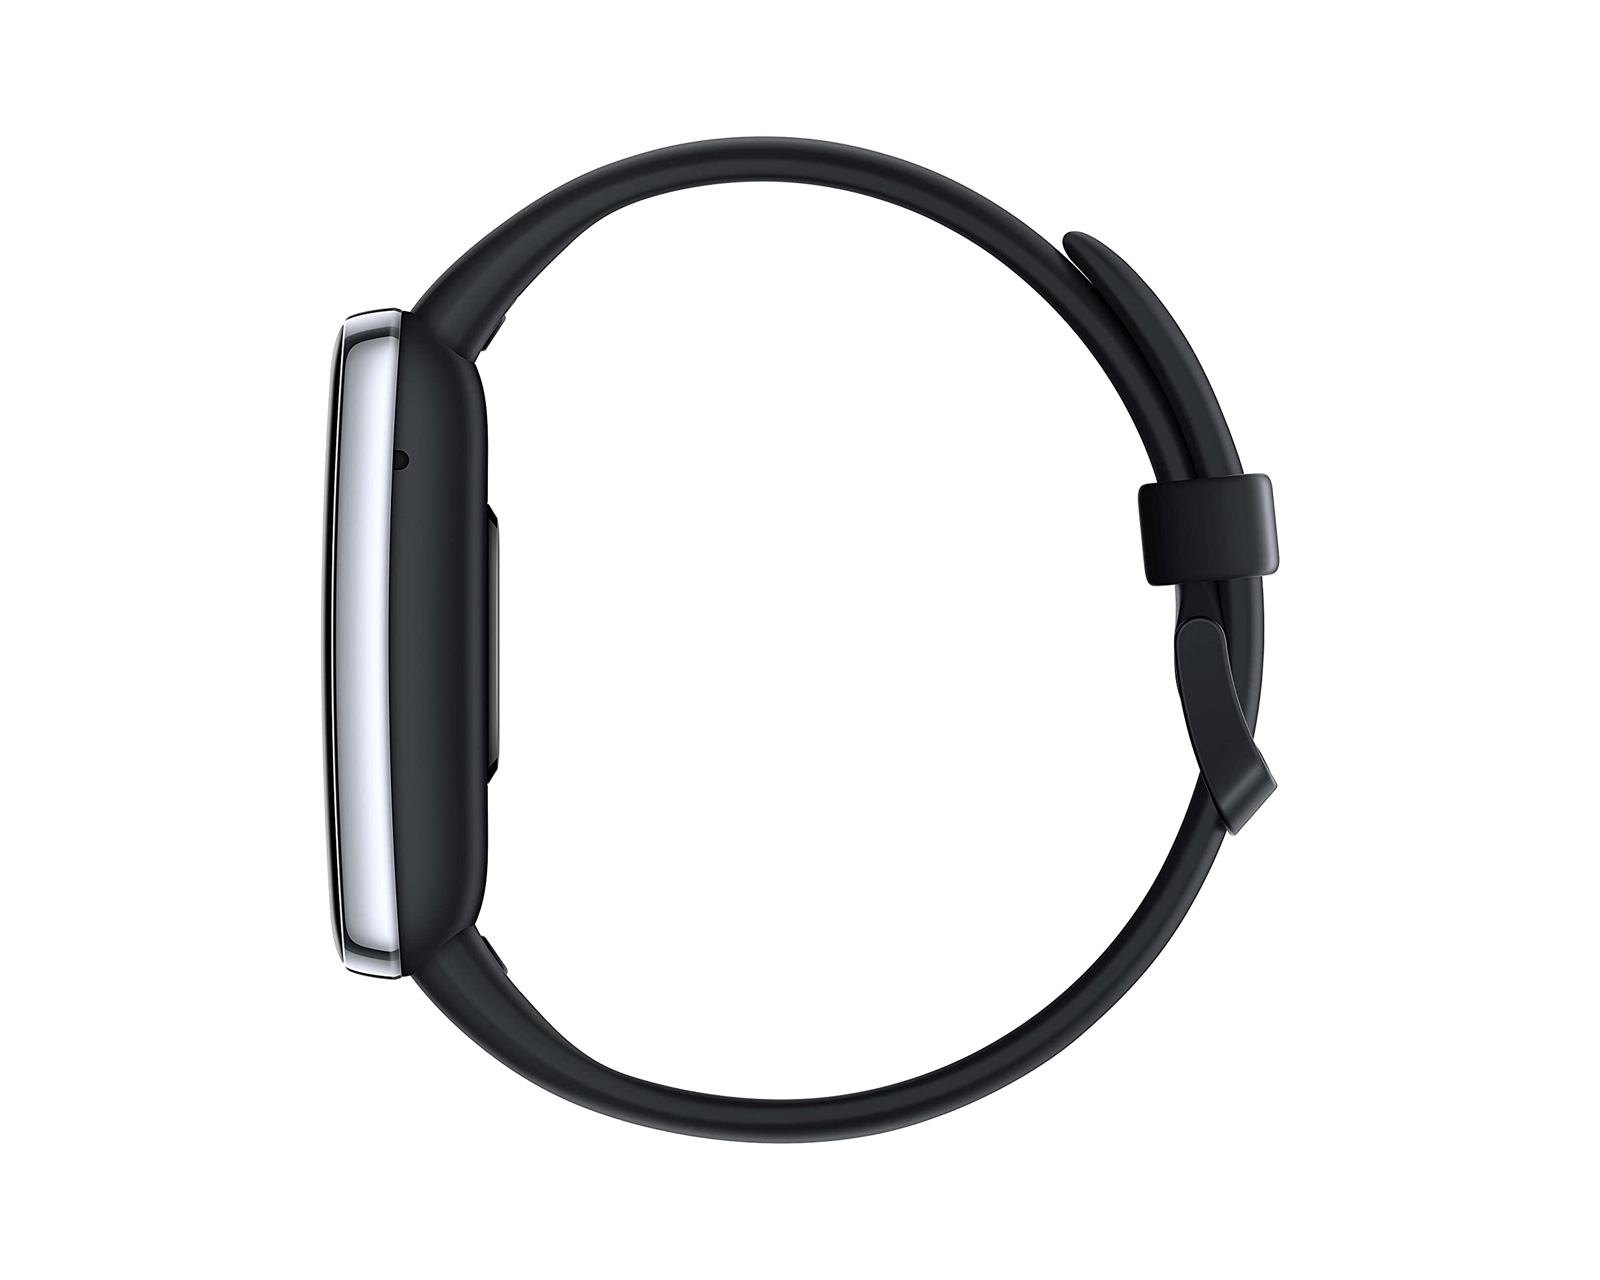 Xiaomi Smart Band 7 Pro Sport Smart Touch Watch Fitness Wrist Activity  Tracker